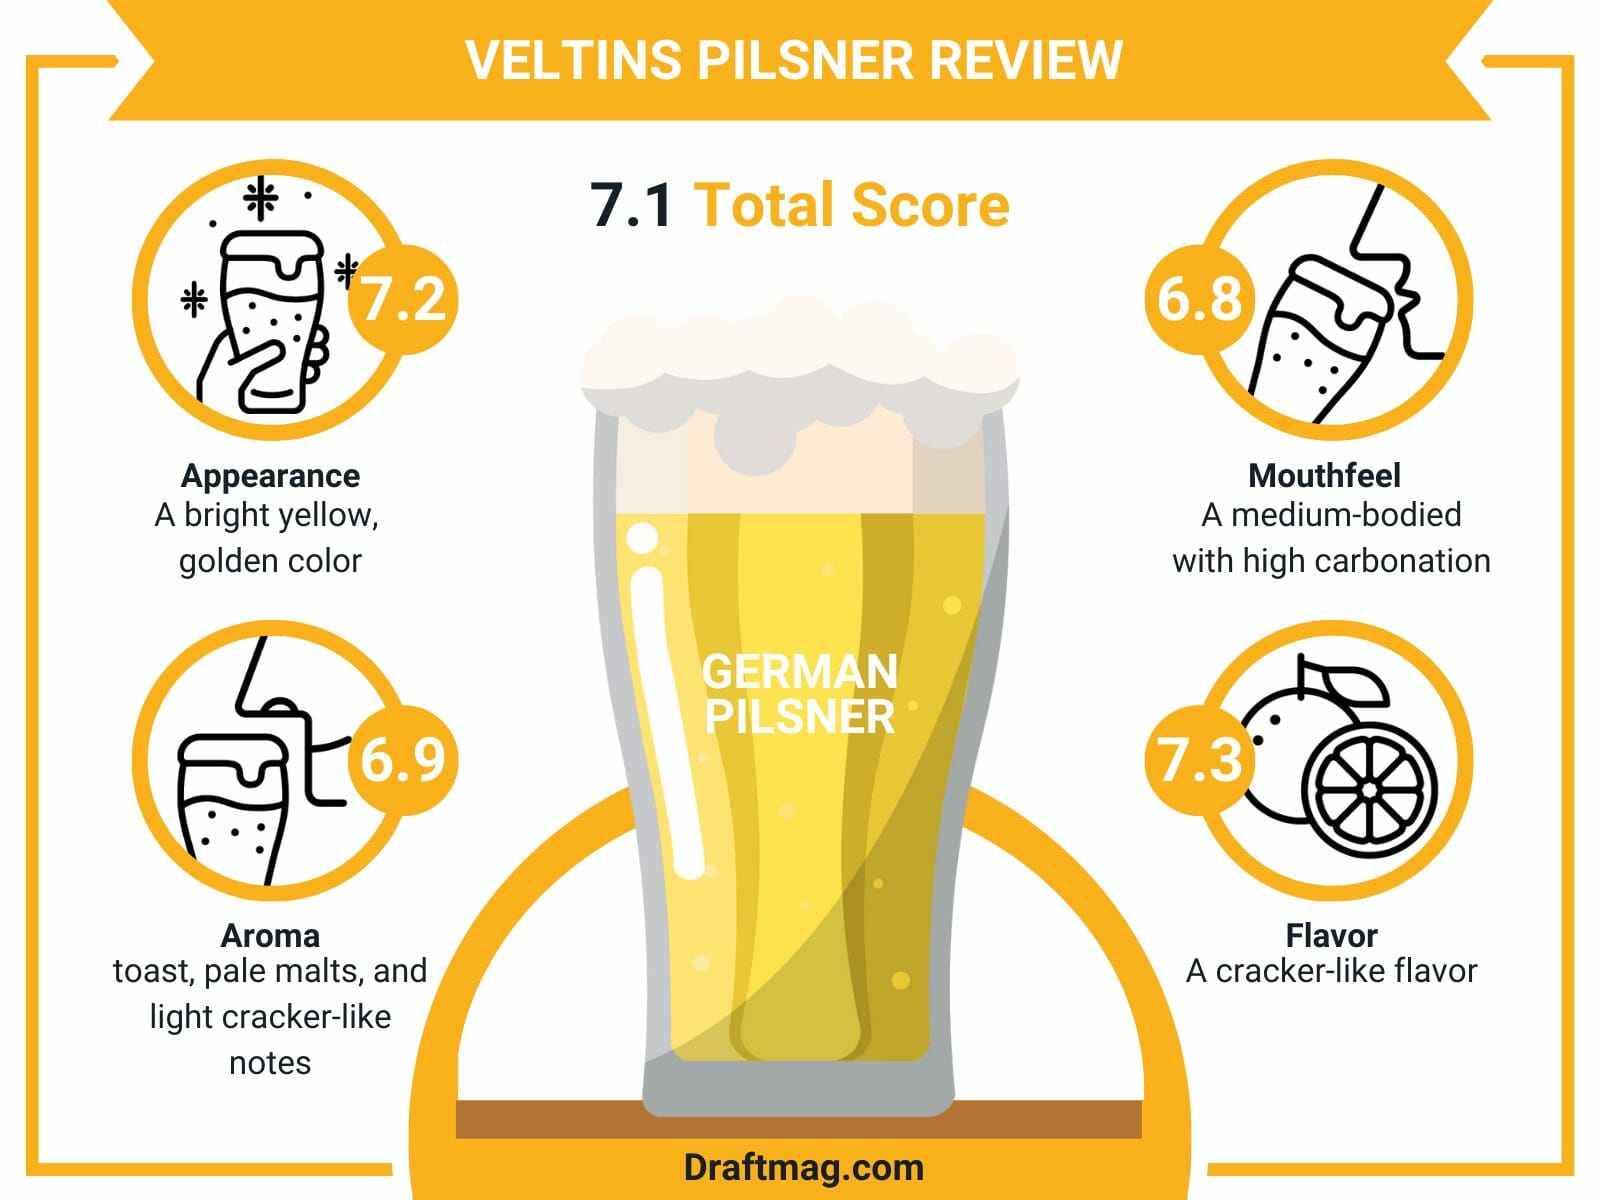 Veltins pilsner review infographic